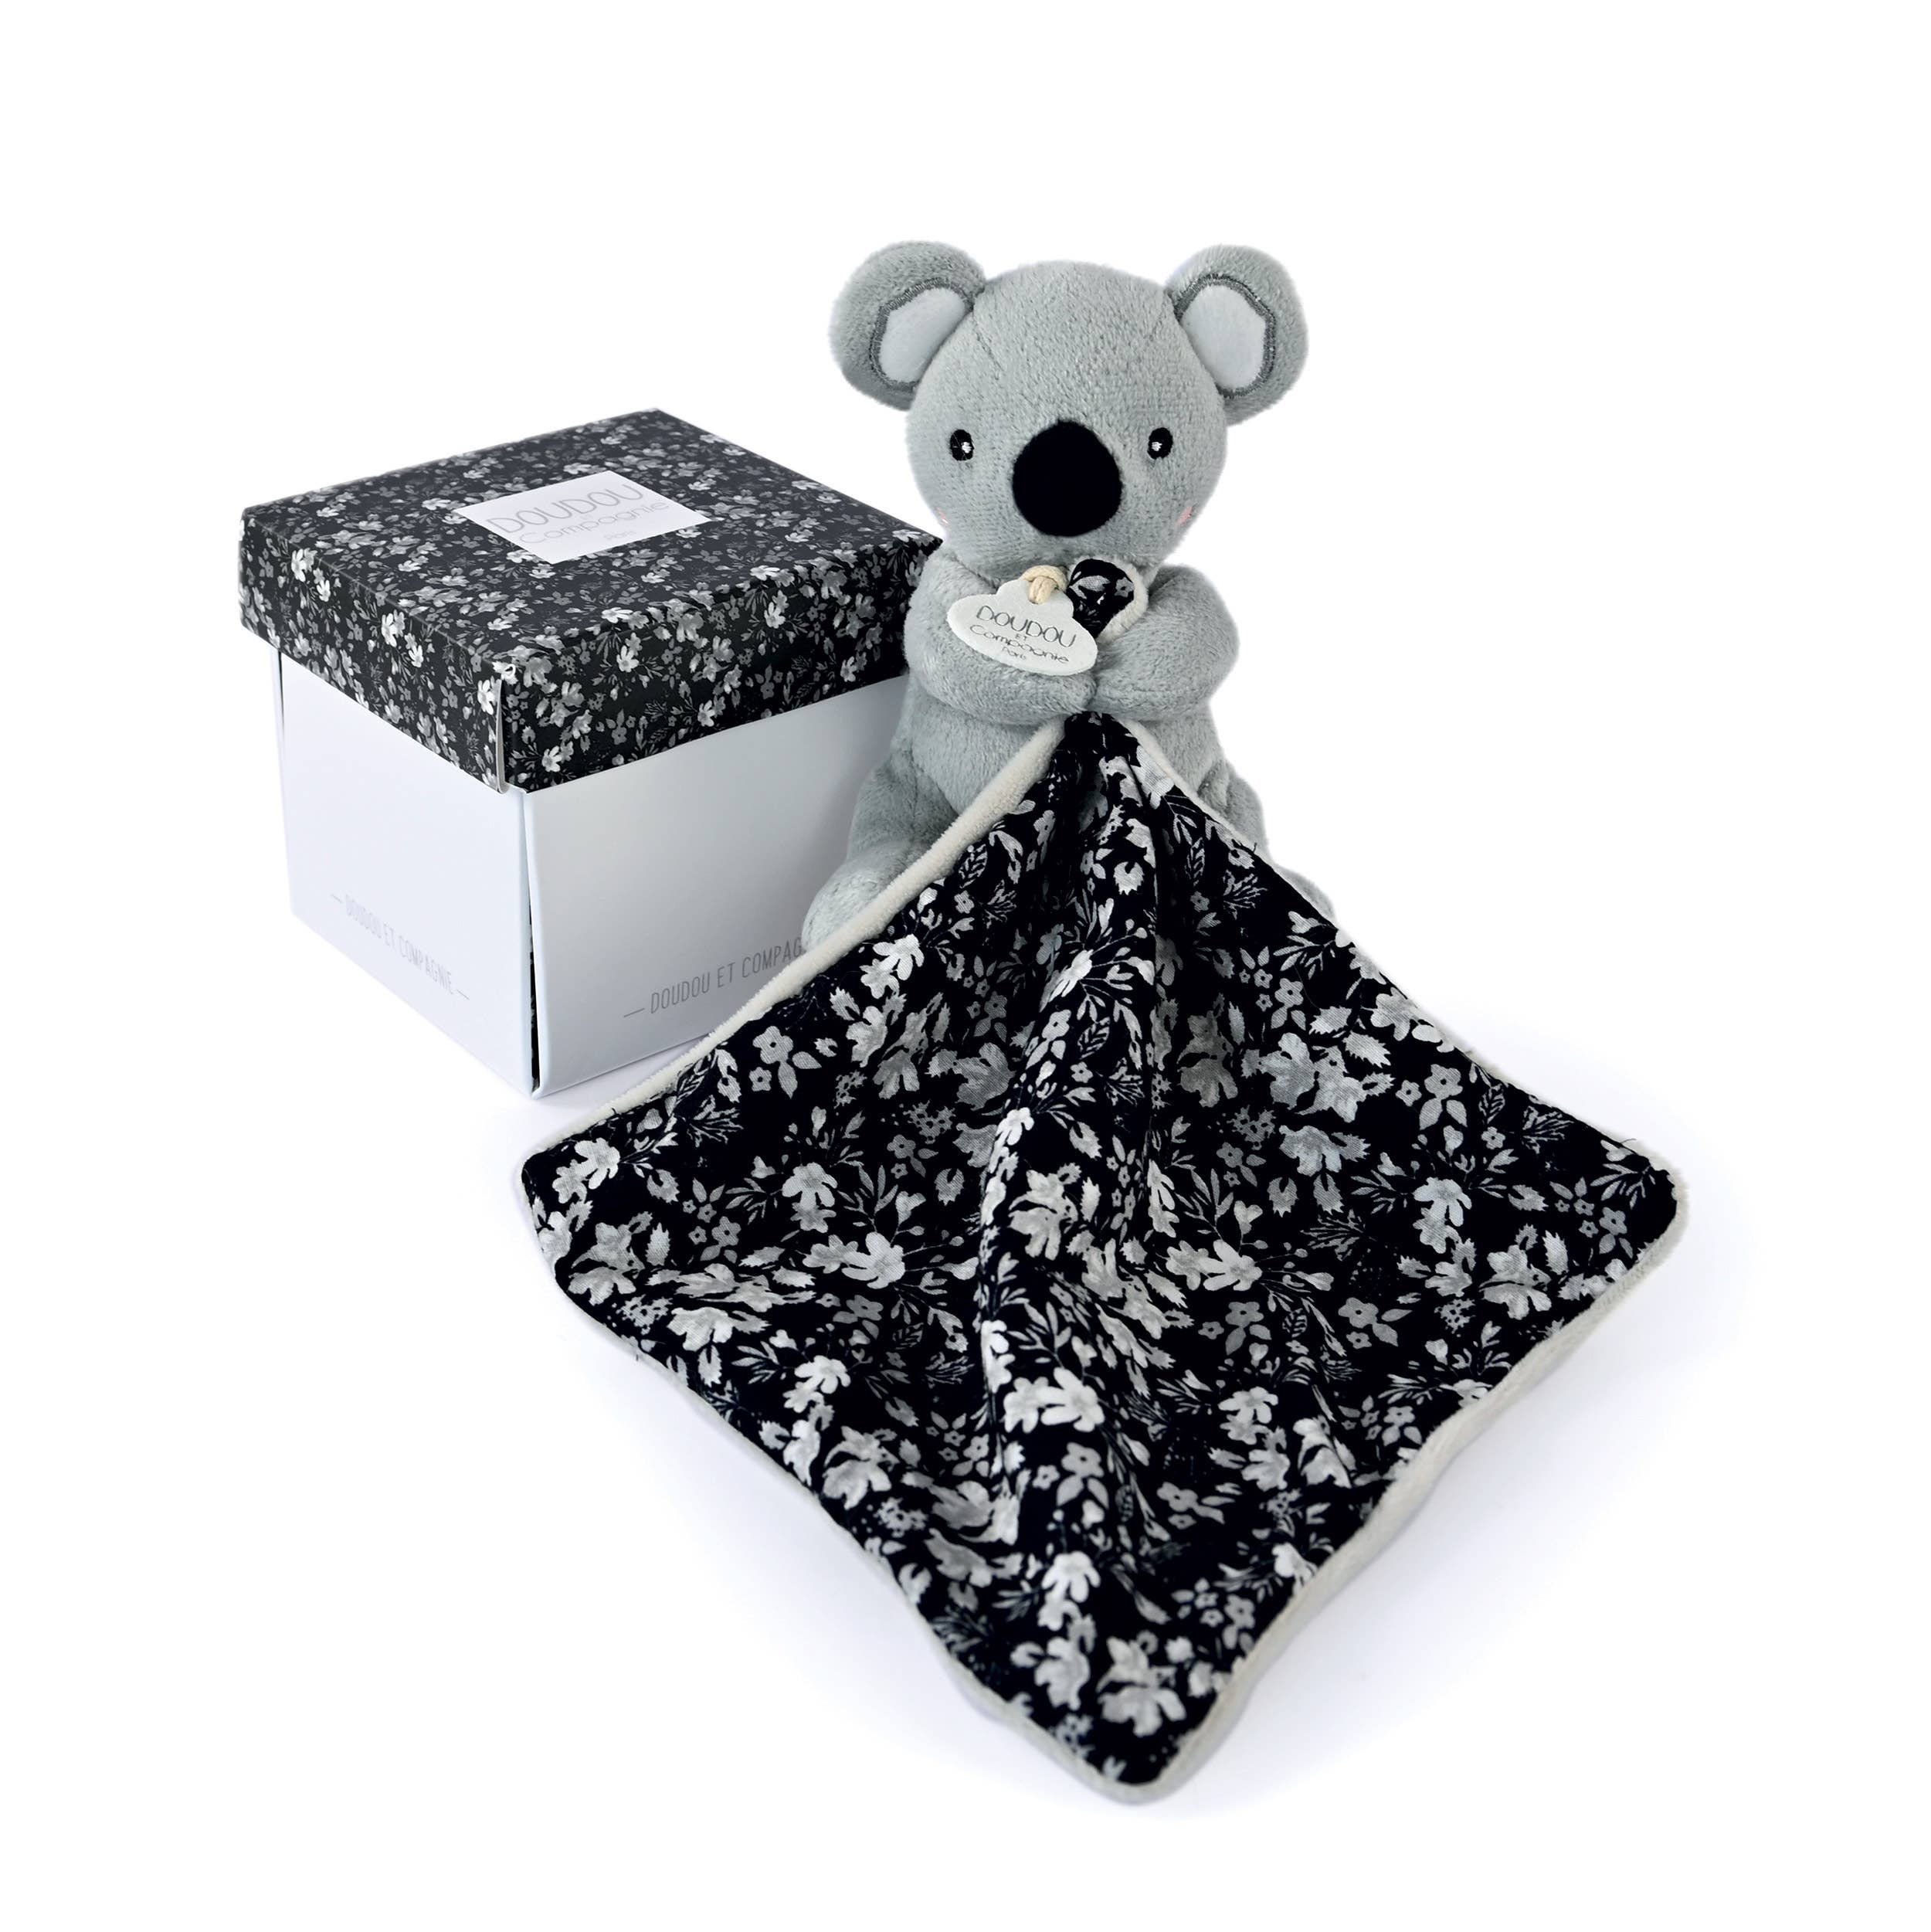 Bohaime Koala Puppet with floral print and gift box